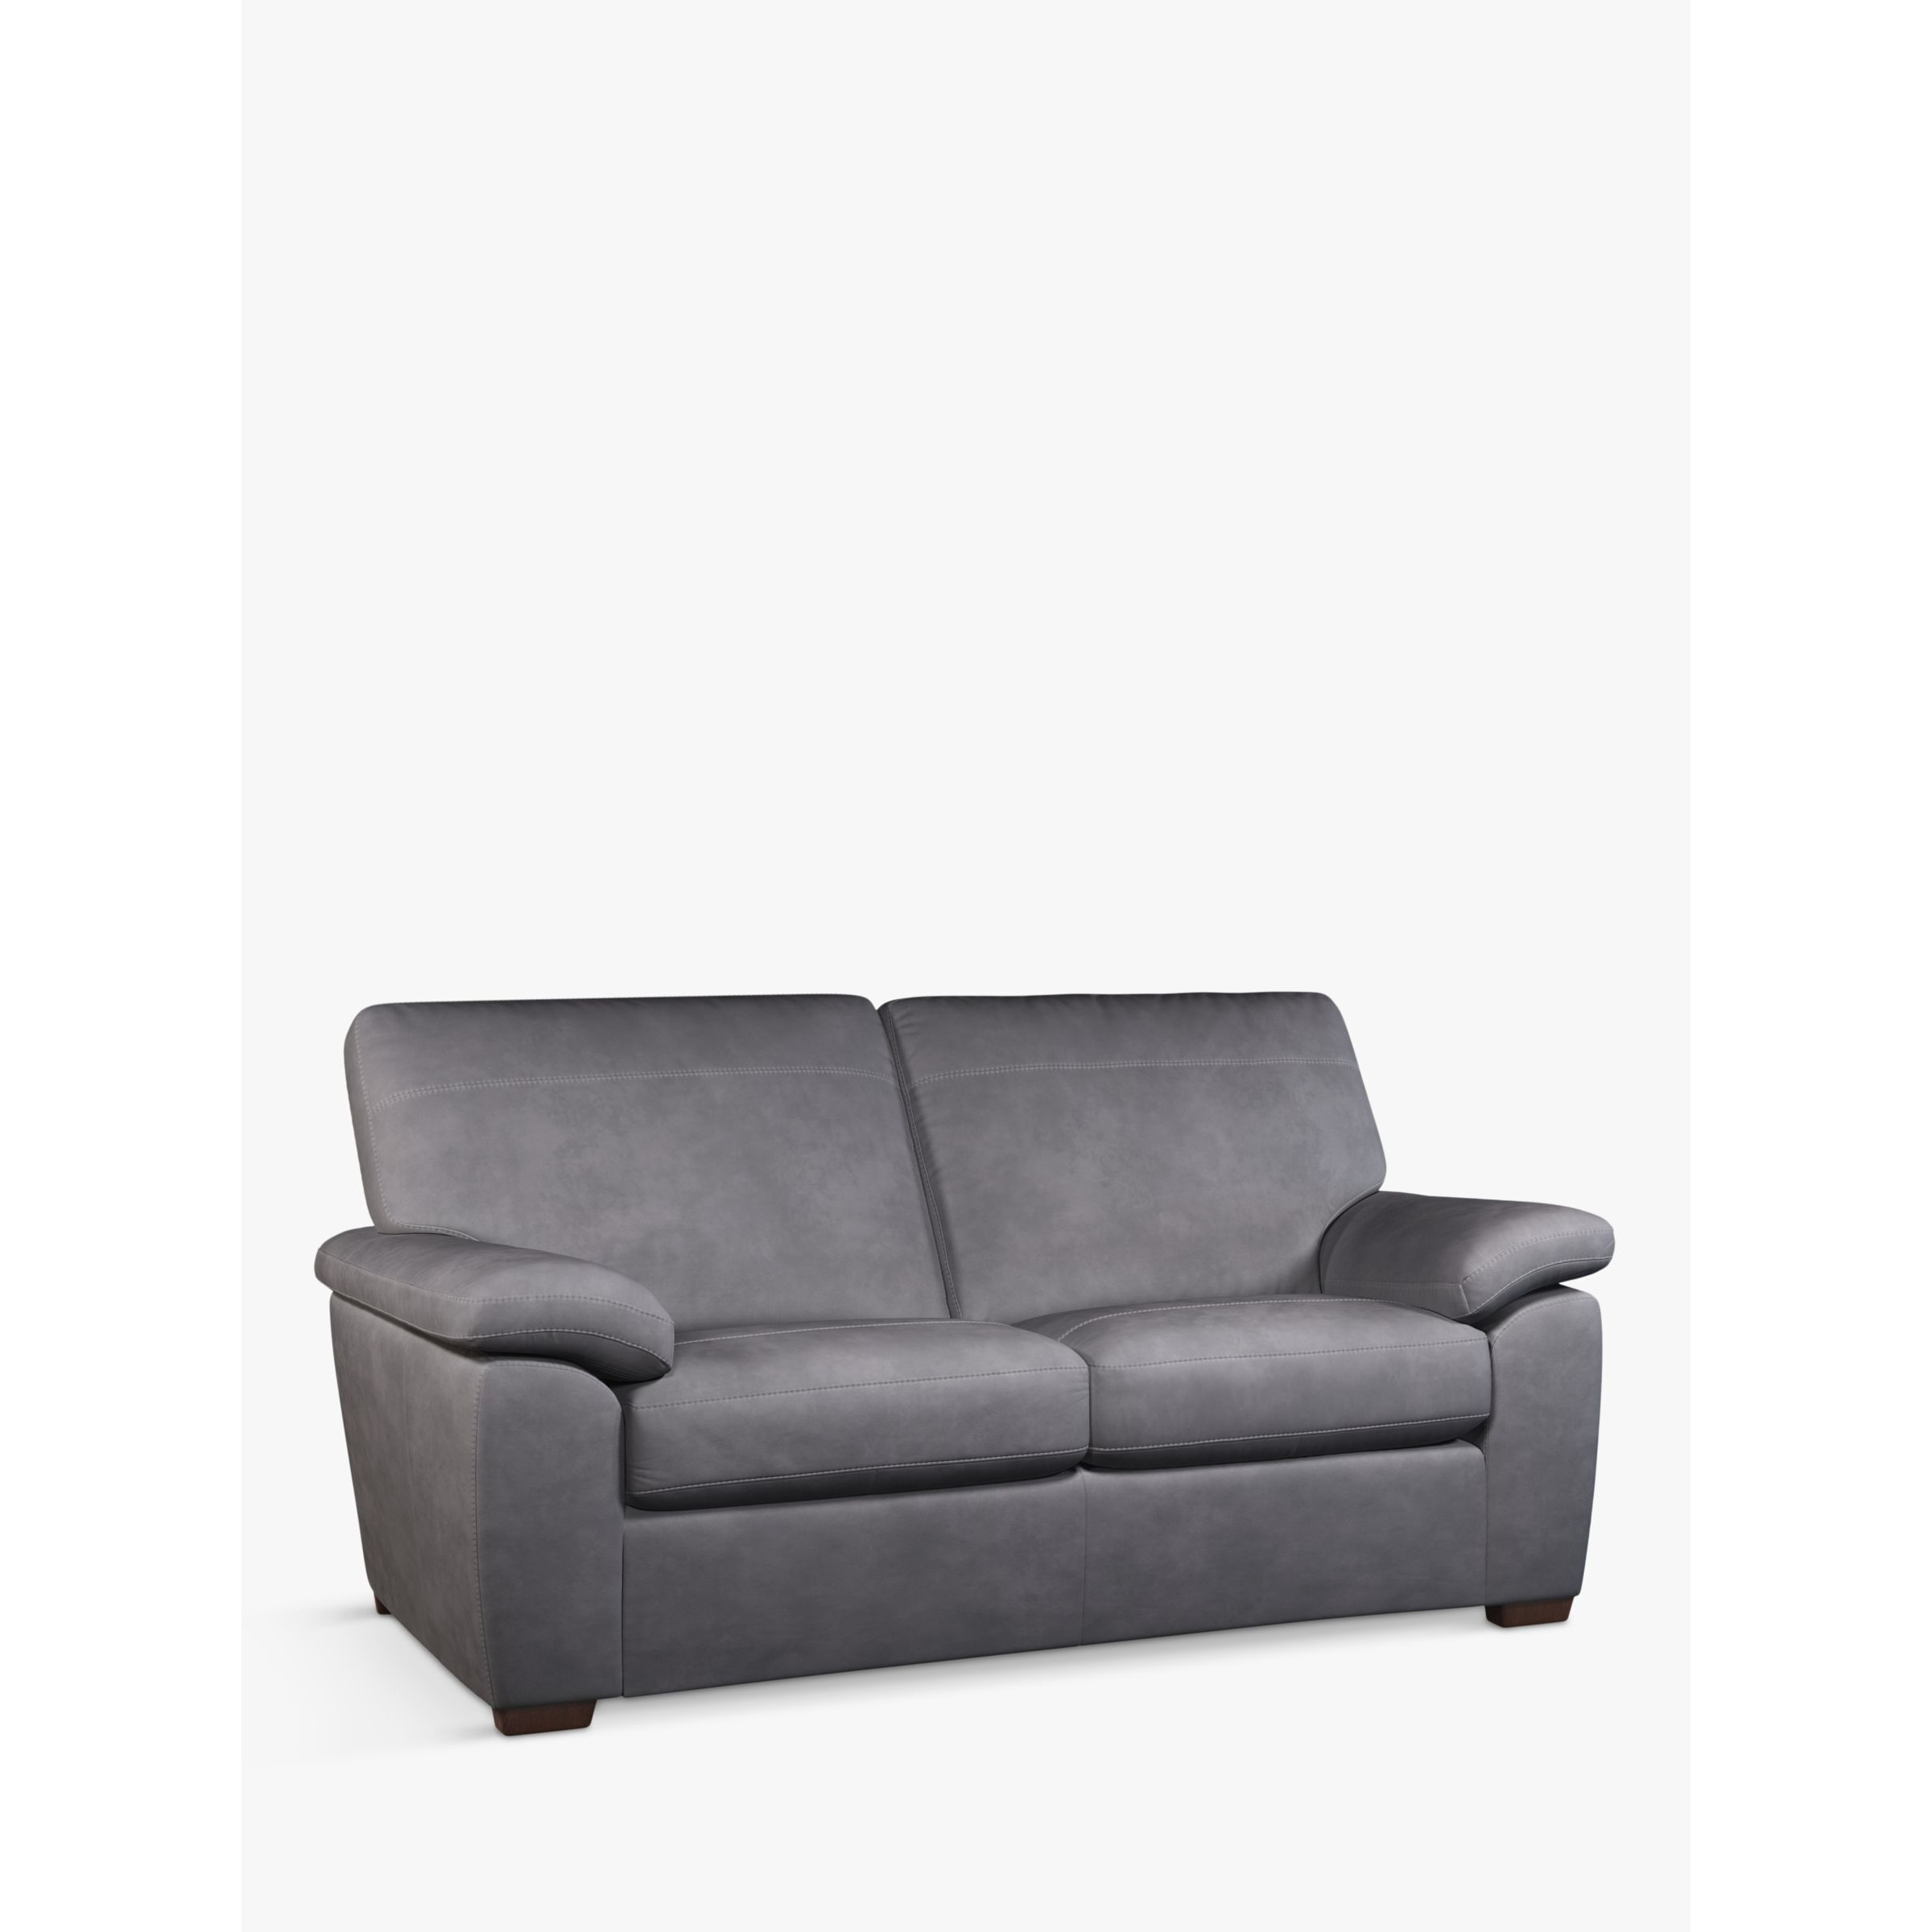 John Lewis Camden Medium 2 Seater Leather Sofa Bed, Dark Leg - image 1